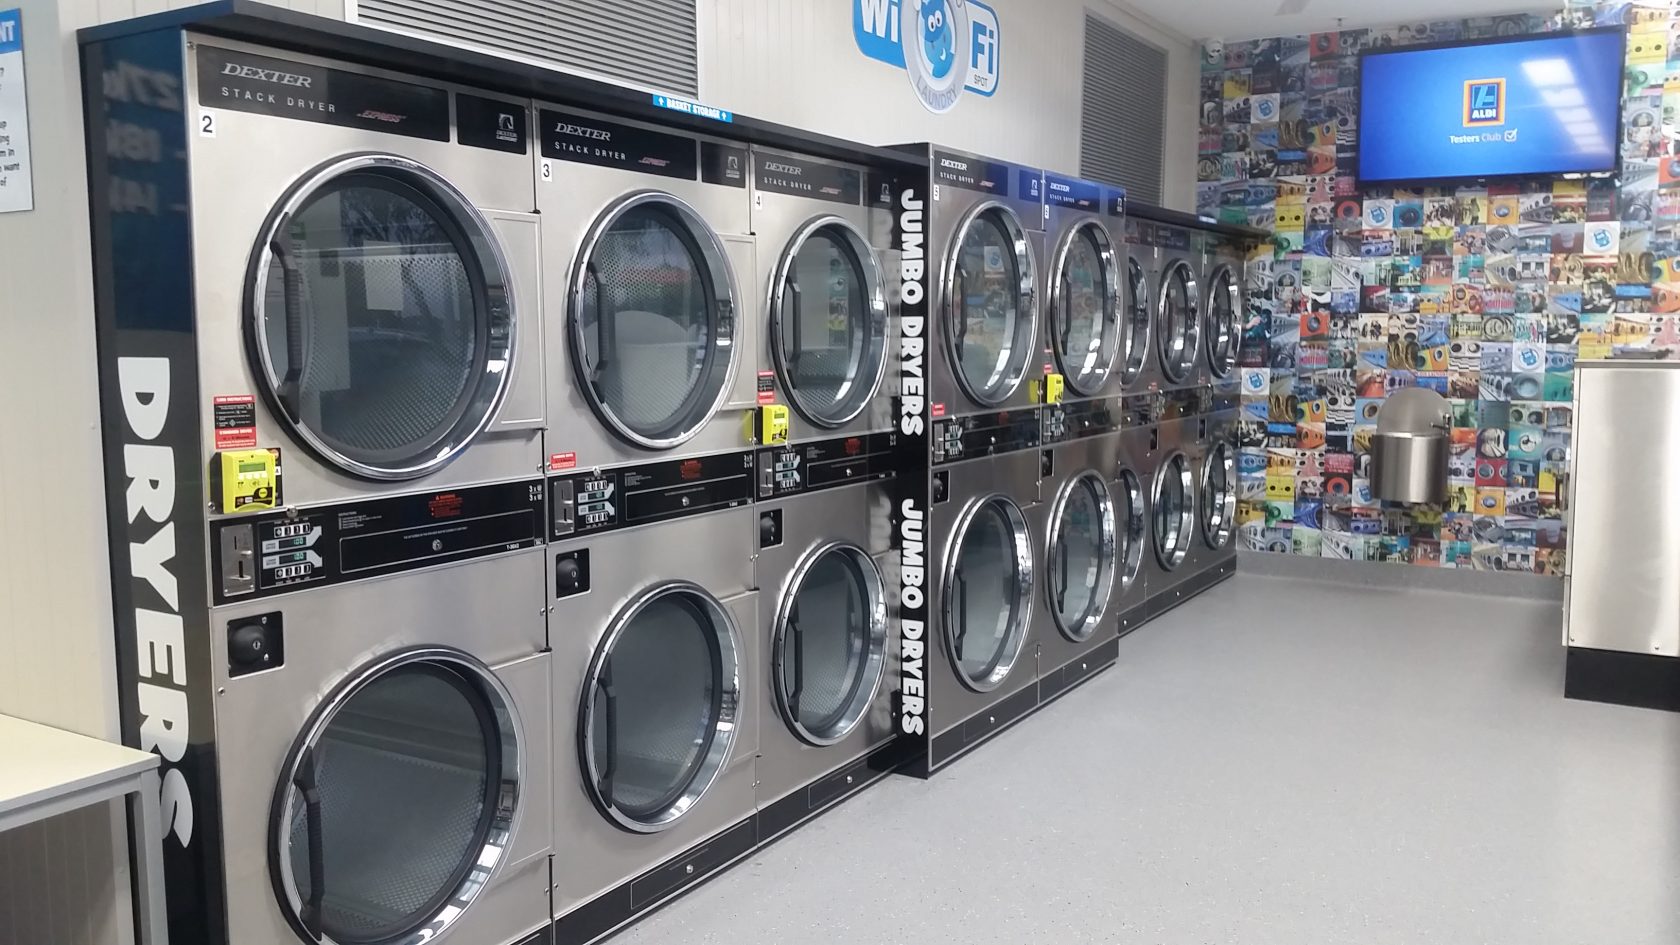 Blue Hippo, Laundromat Near Me, Melbourne Coin Laundry Service